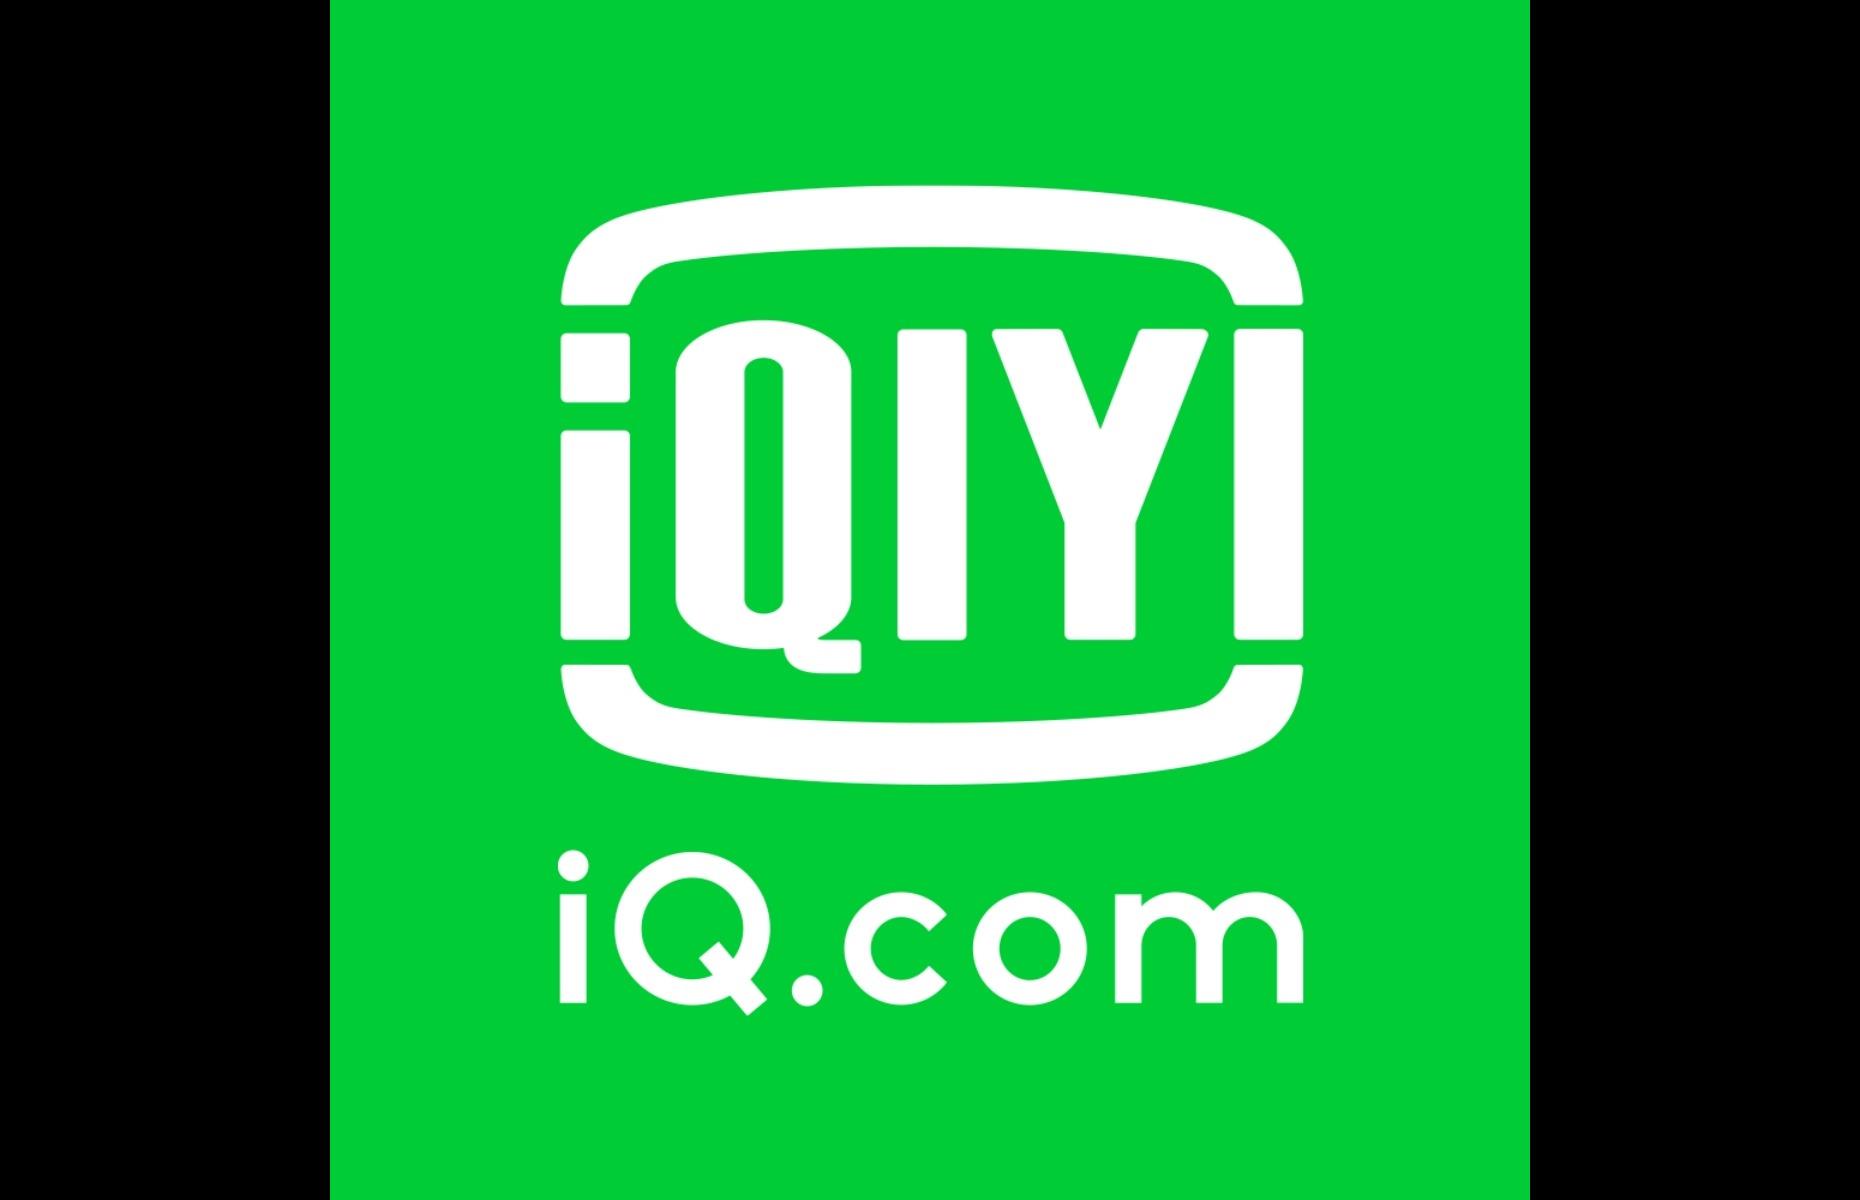 iQIYI – 119.7 million subscribers